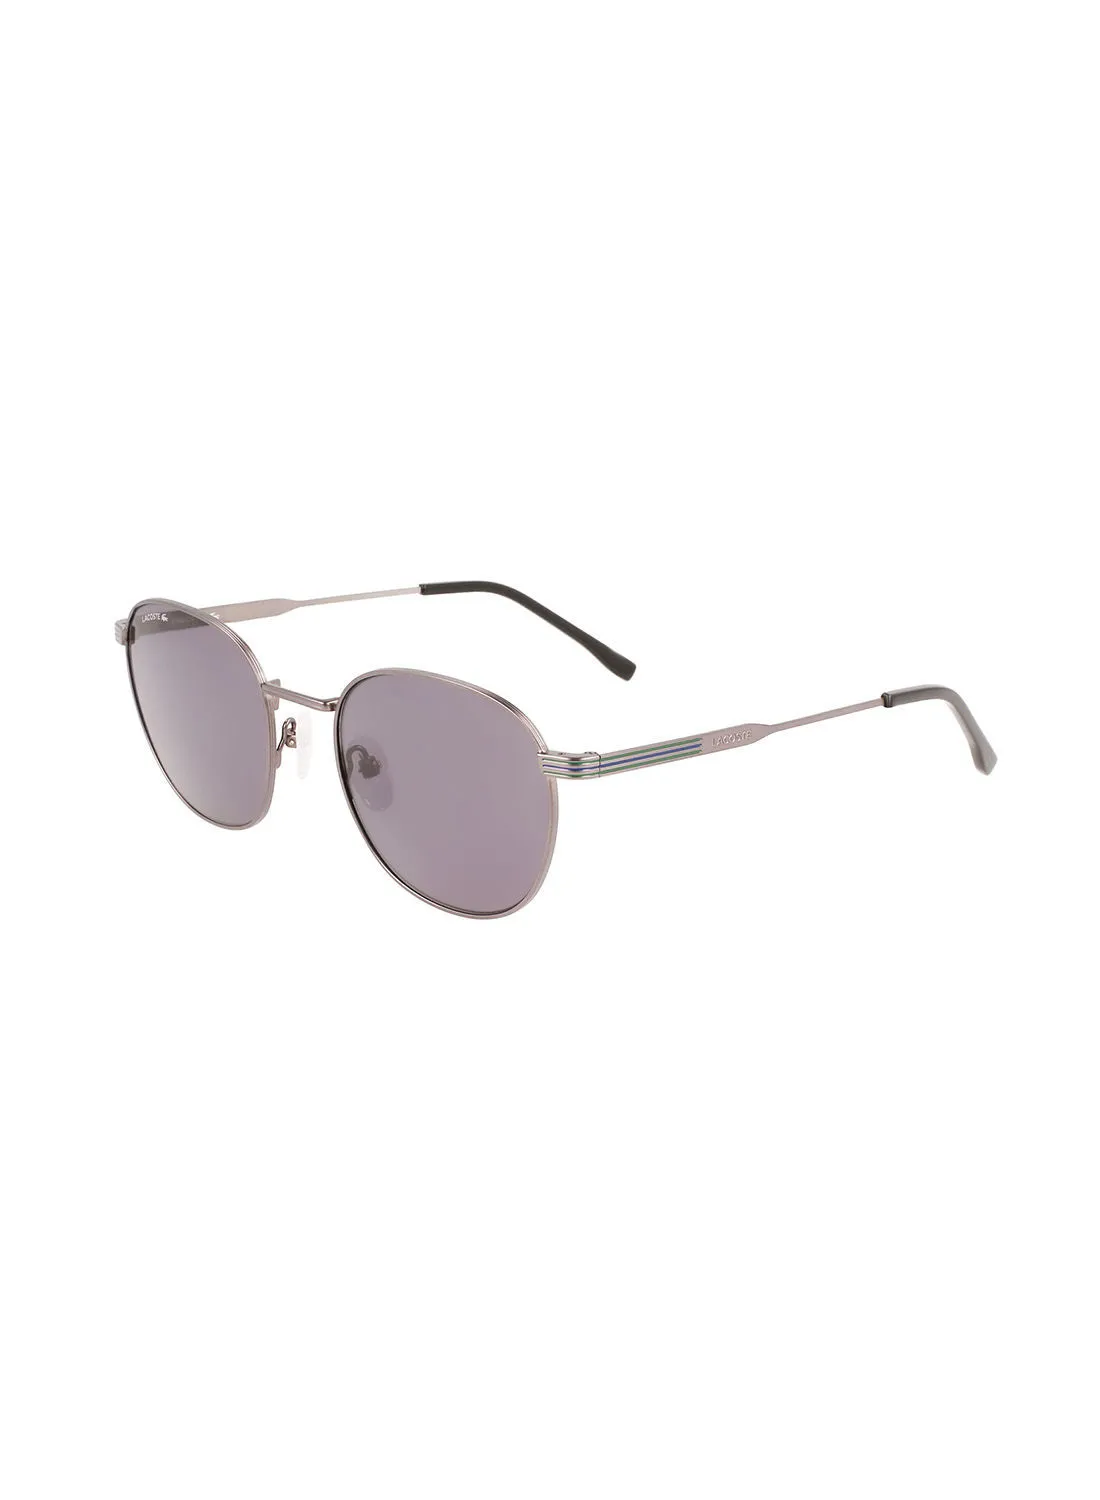 LACOSTE Full Rim Metal Oval Sunglasses L251S 5220 (901)